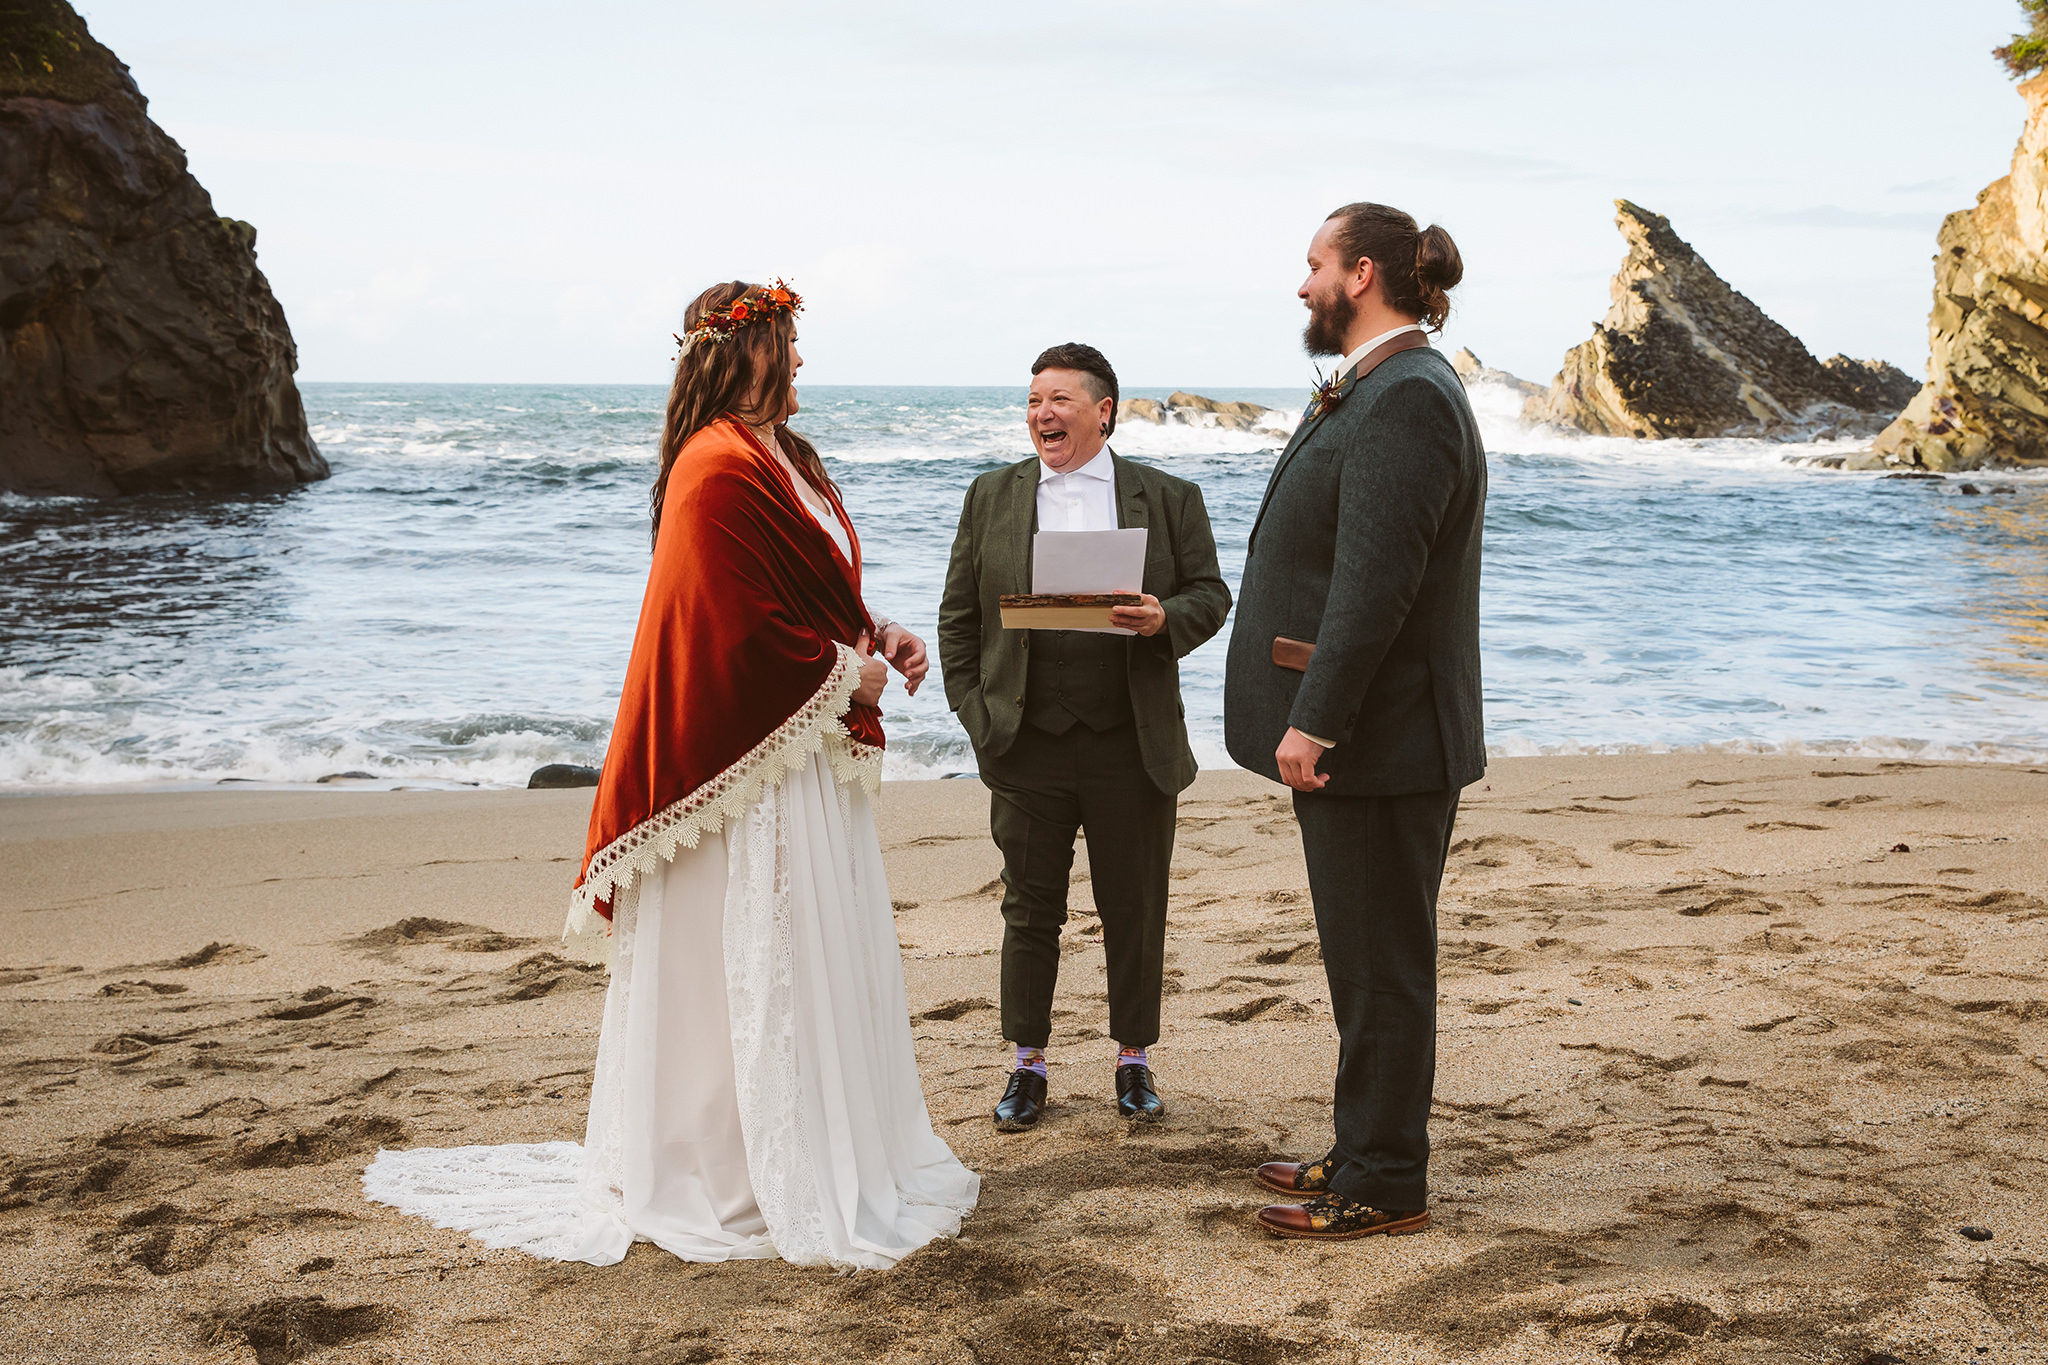 A beach wedding ceremony in Coos Bay, Oregon